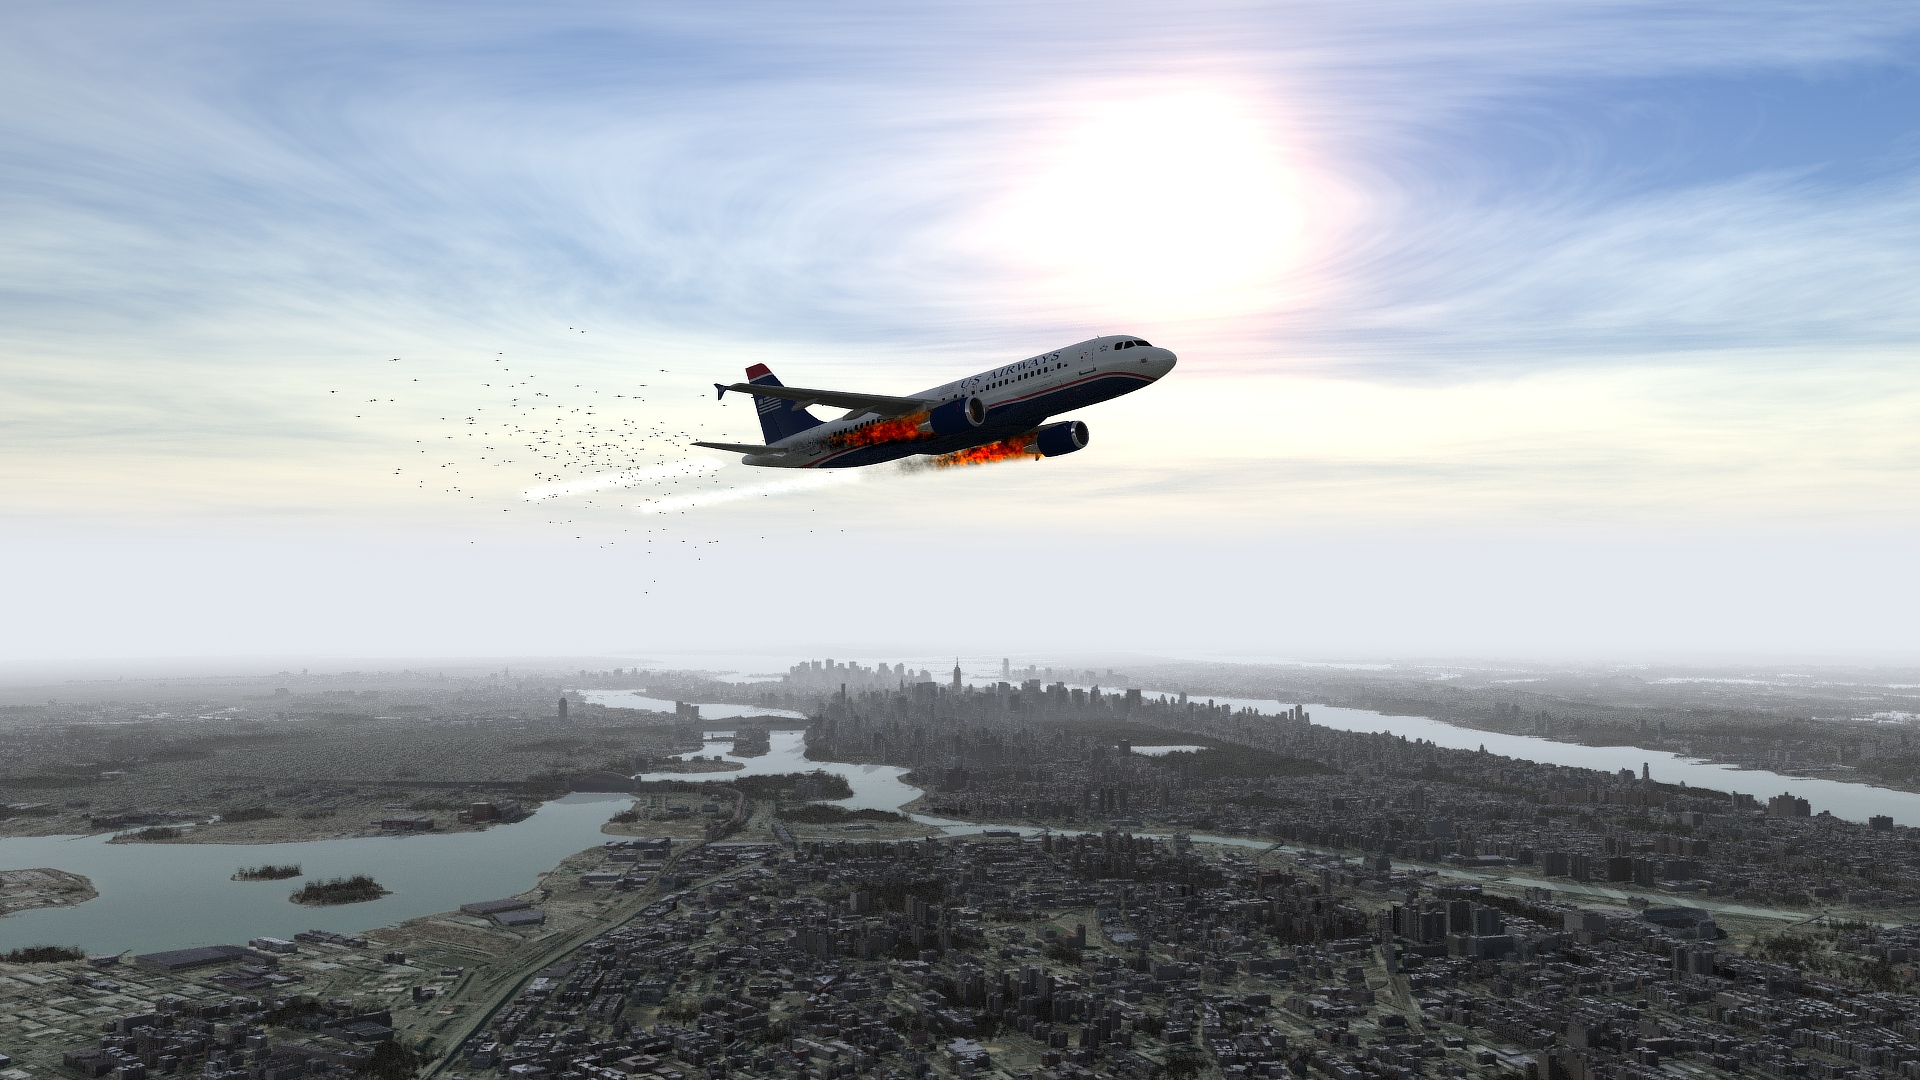 flight 1549 bird strike overview image